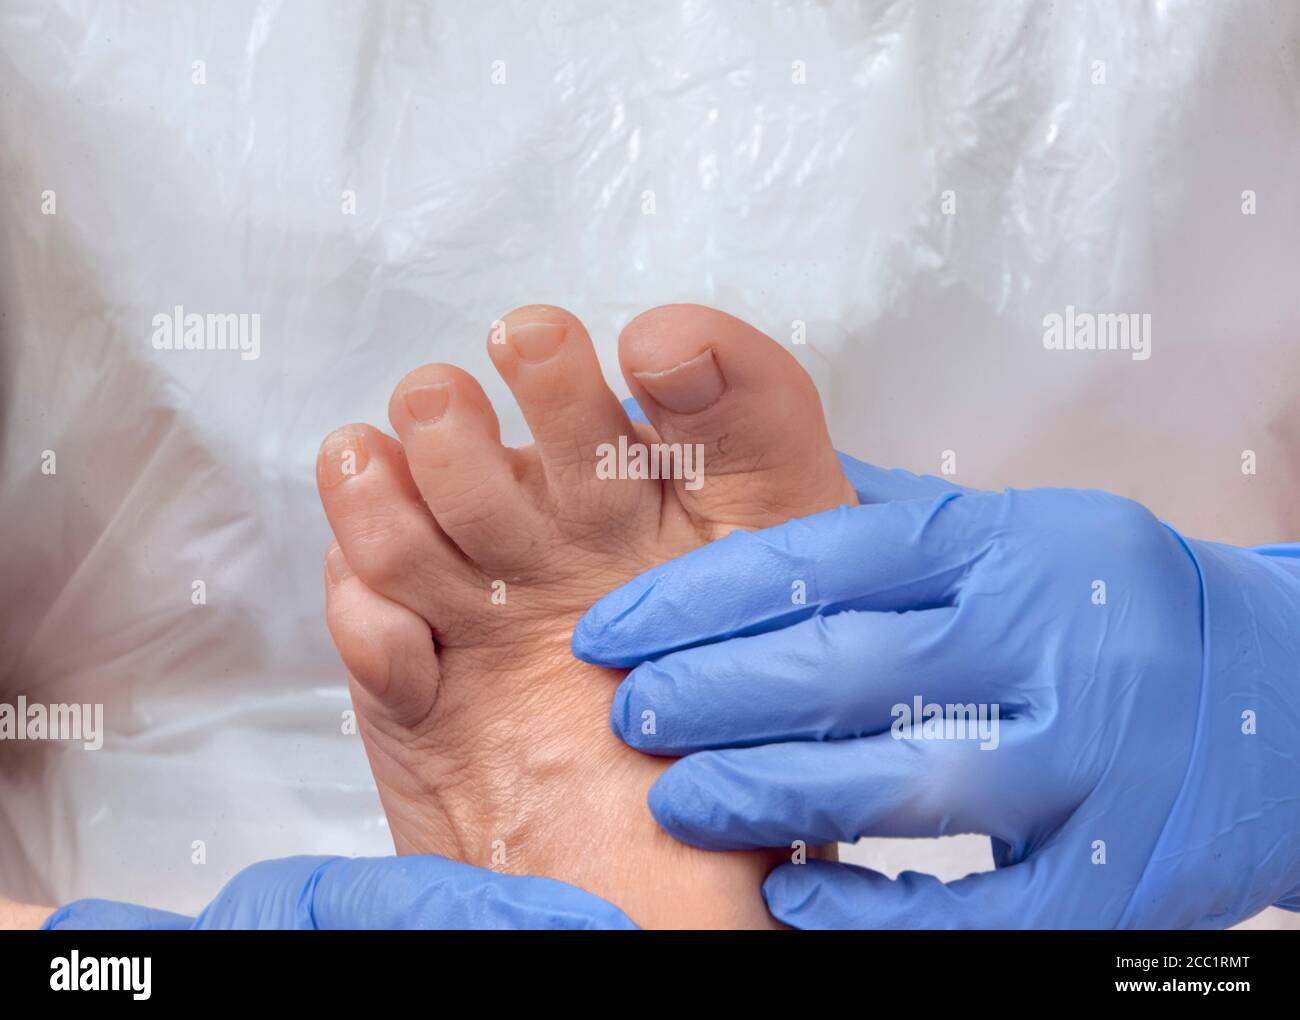 Chiropodist/podiatrist examines a woman's foot Stock Photo